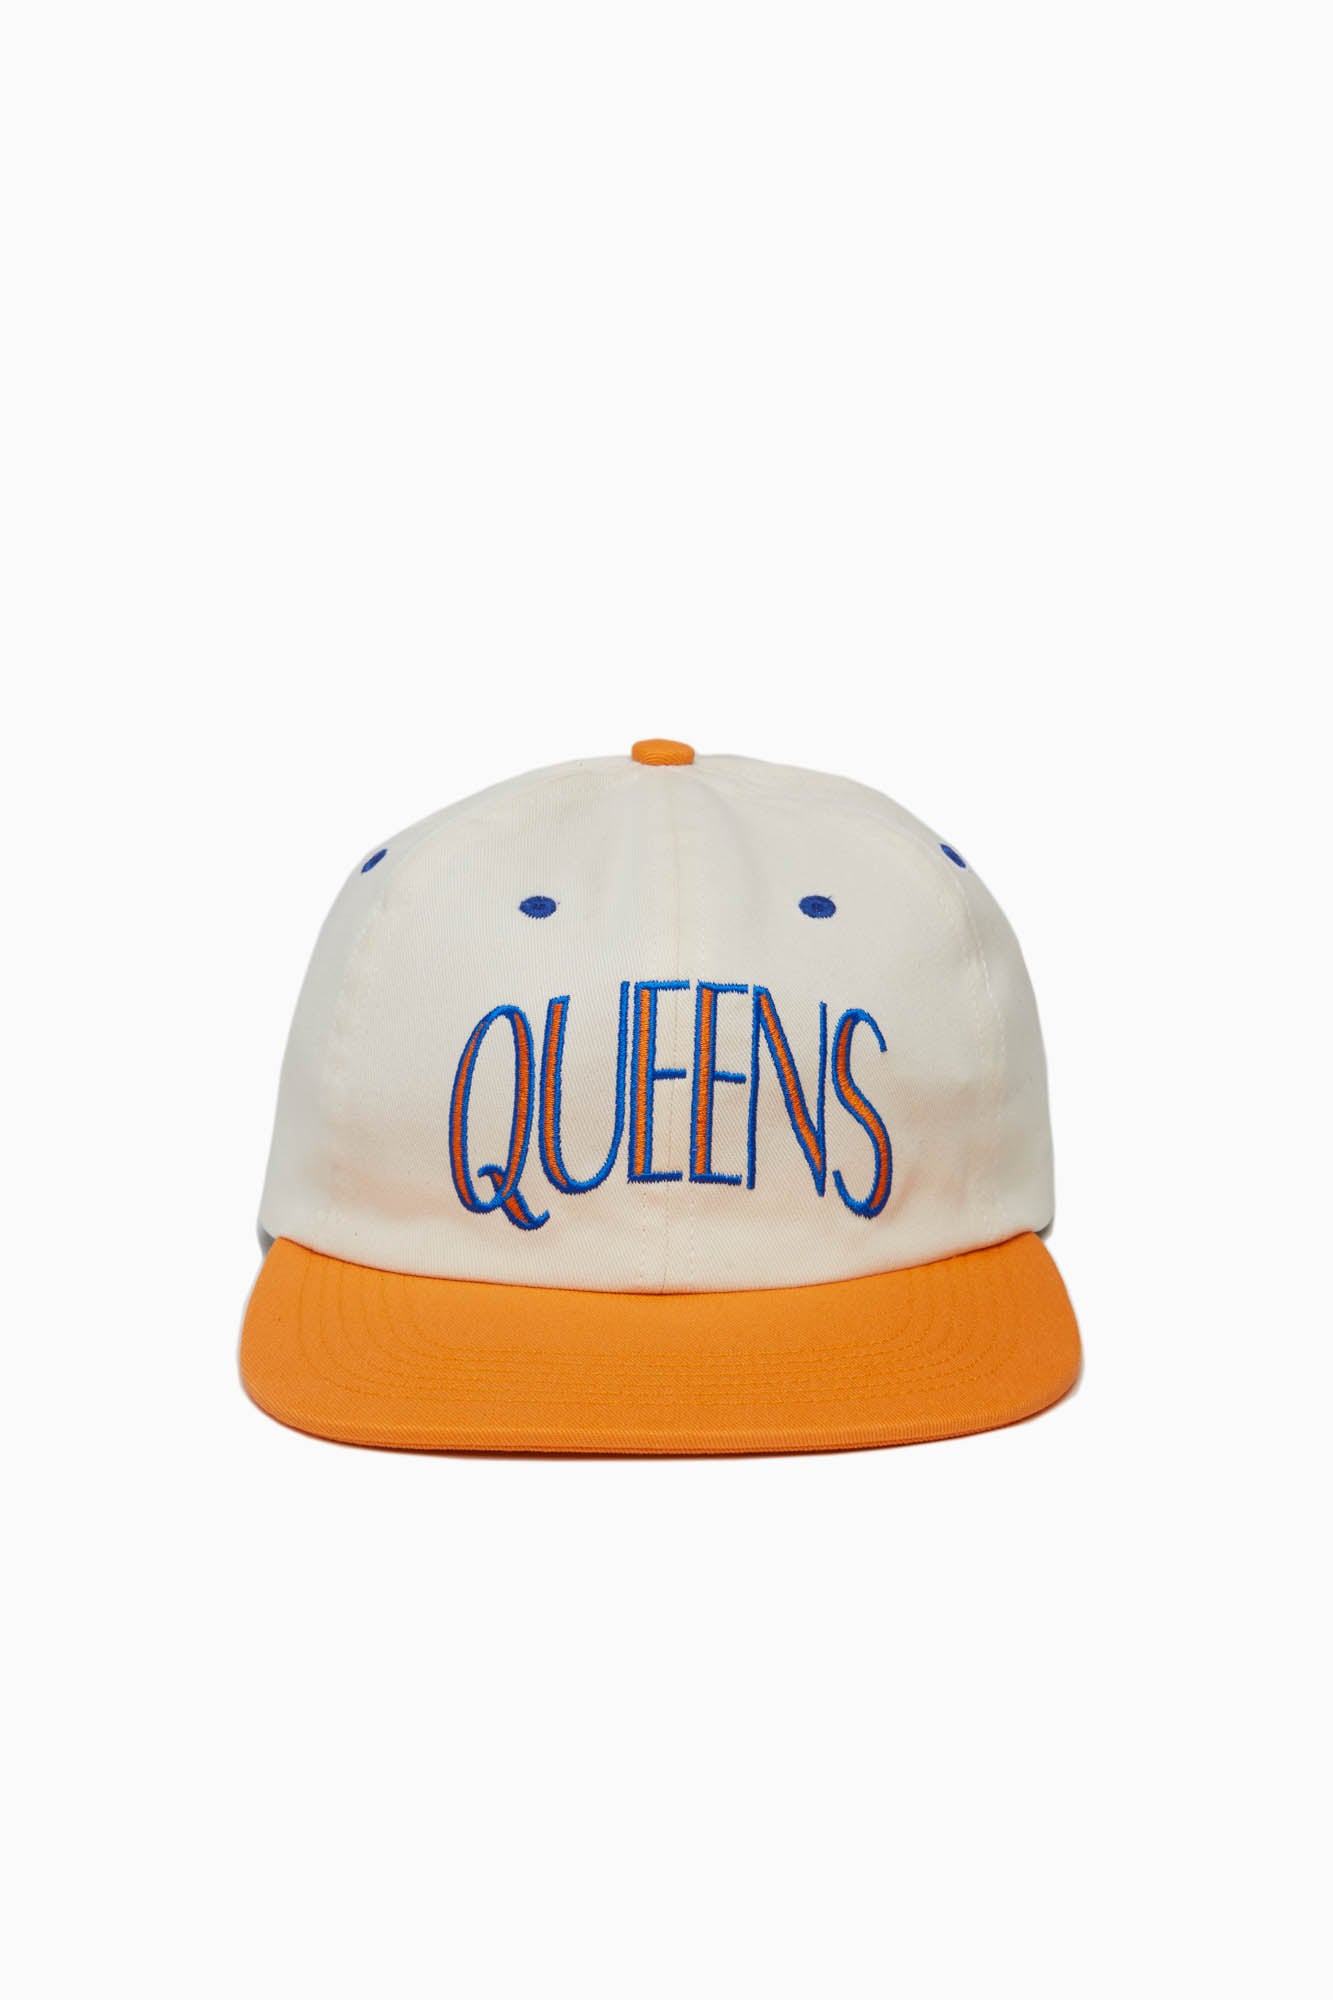 selects Queens 日本未発売 キャップ 帽子 MIN-NANO-